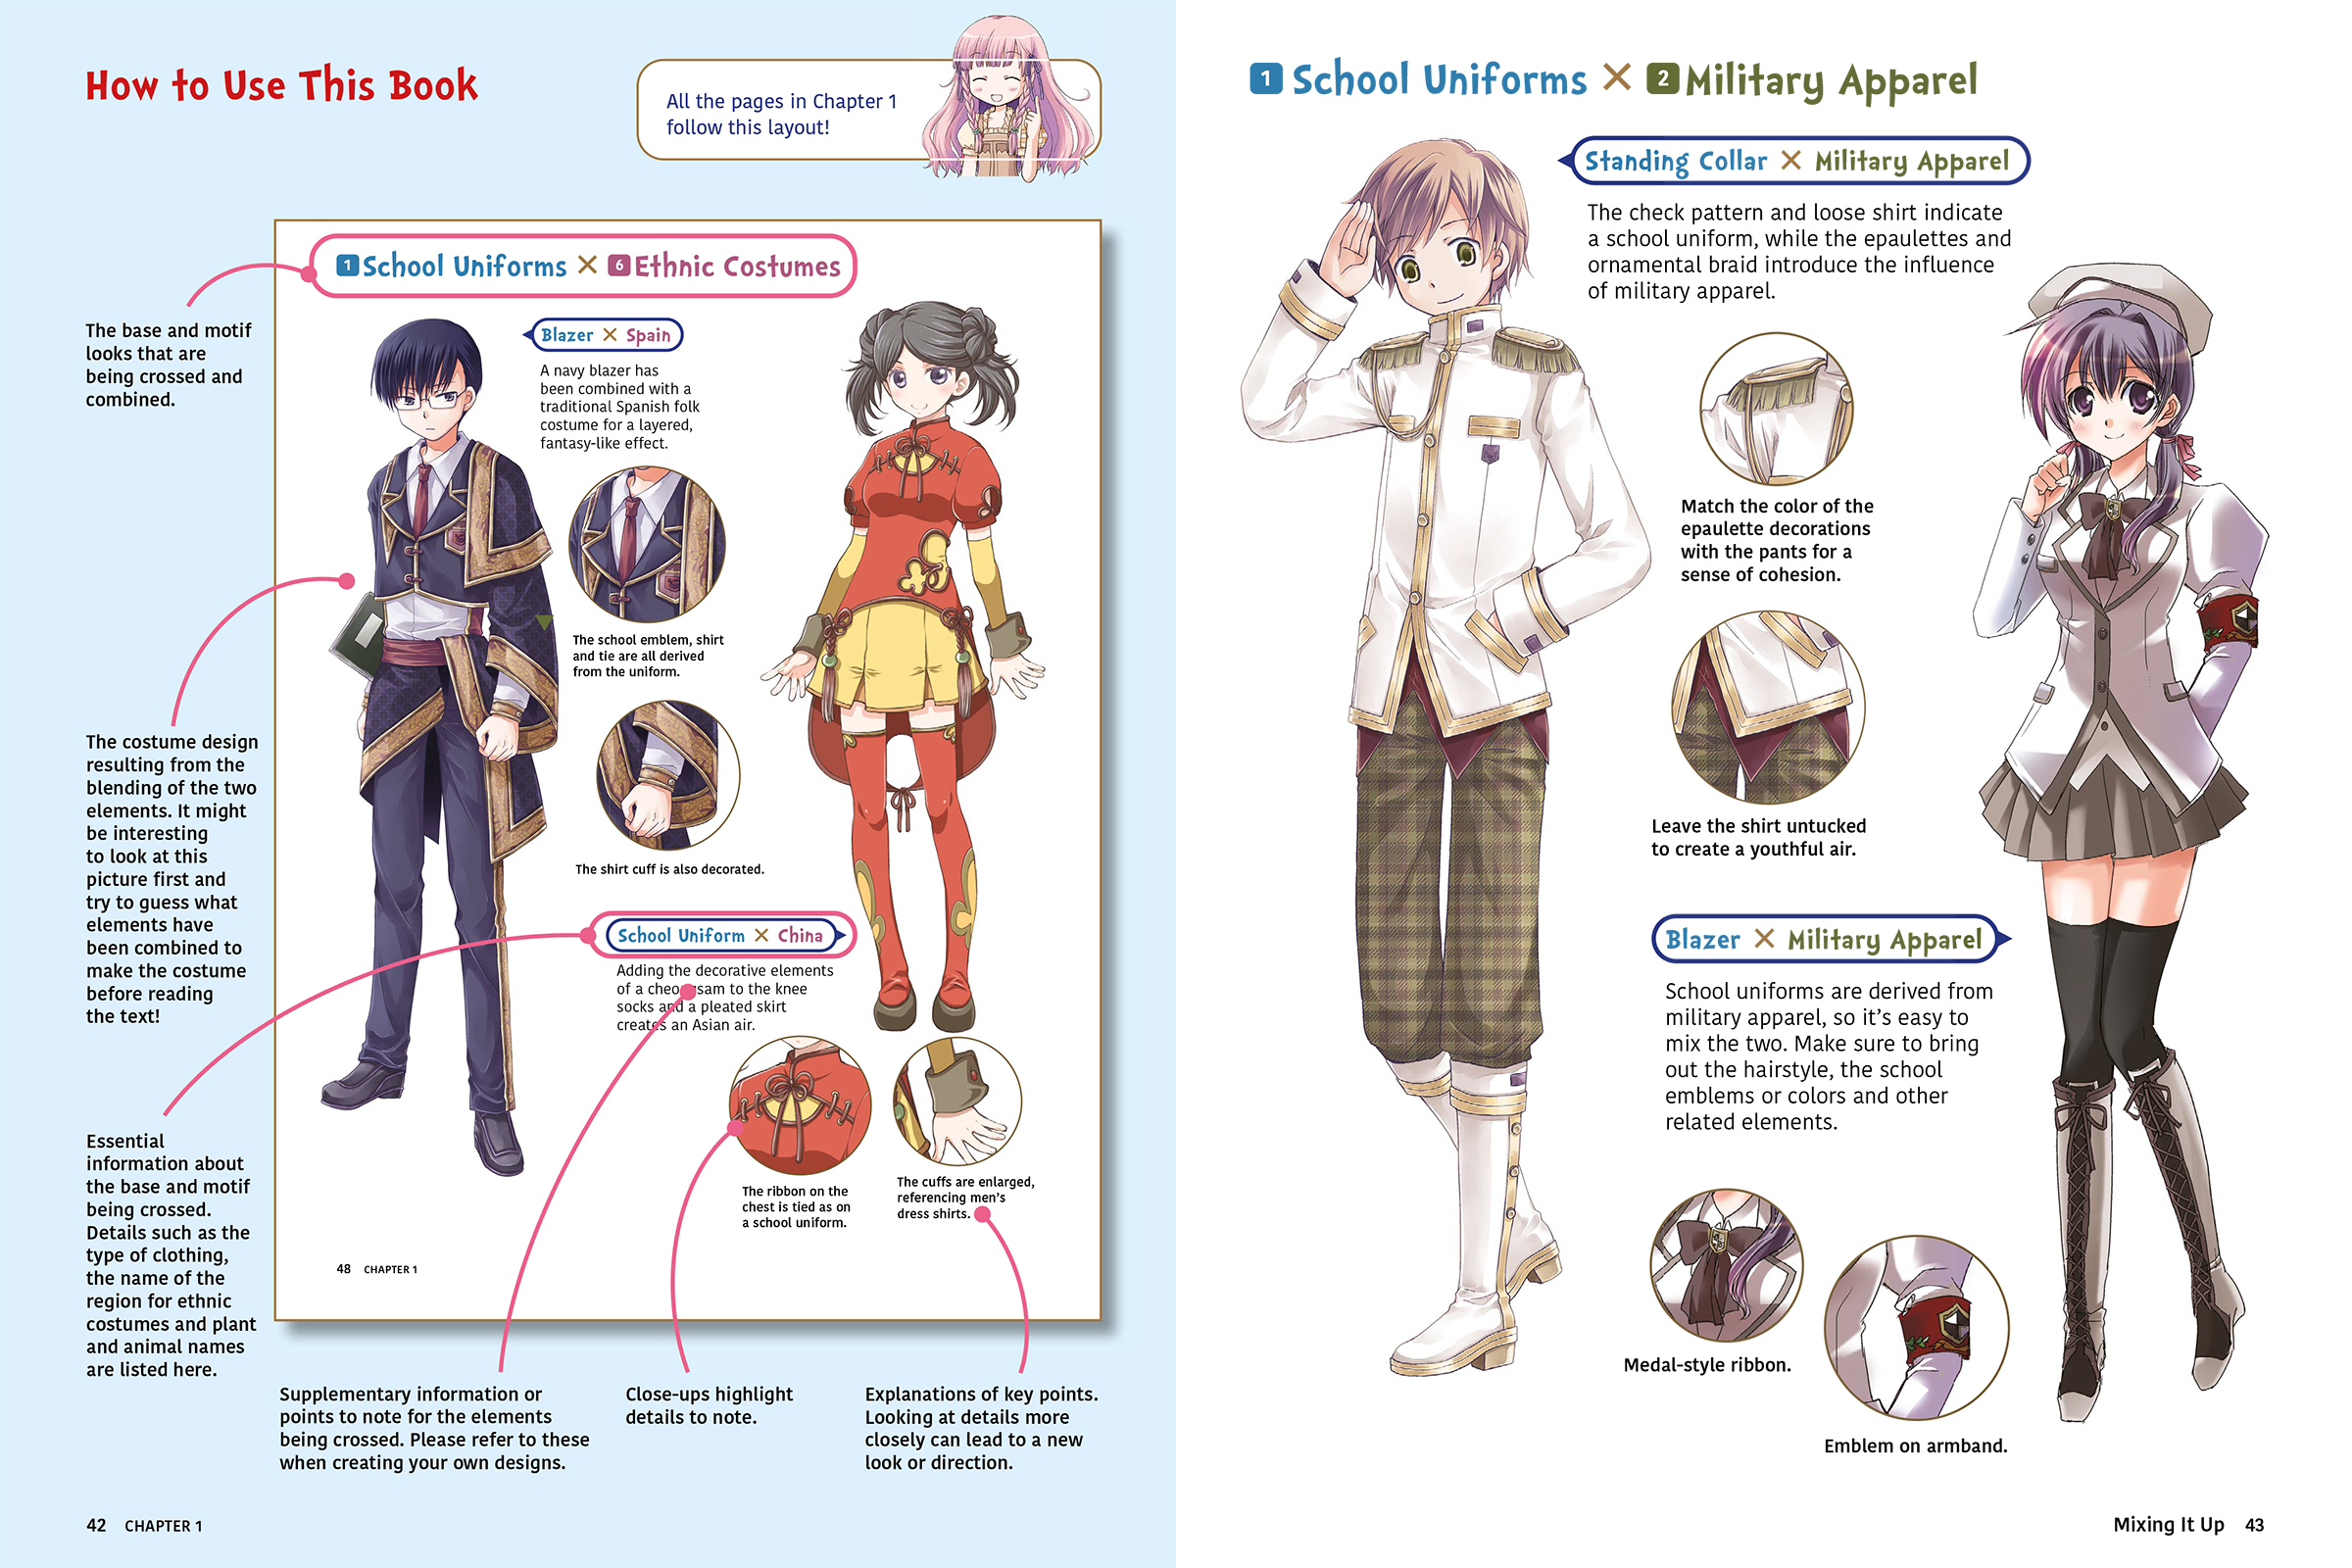 Fantasy Costumes for Manga, Anime & Cosplay